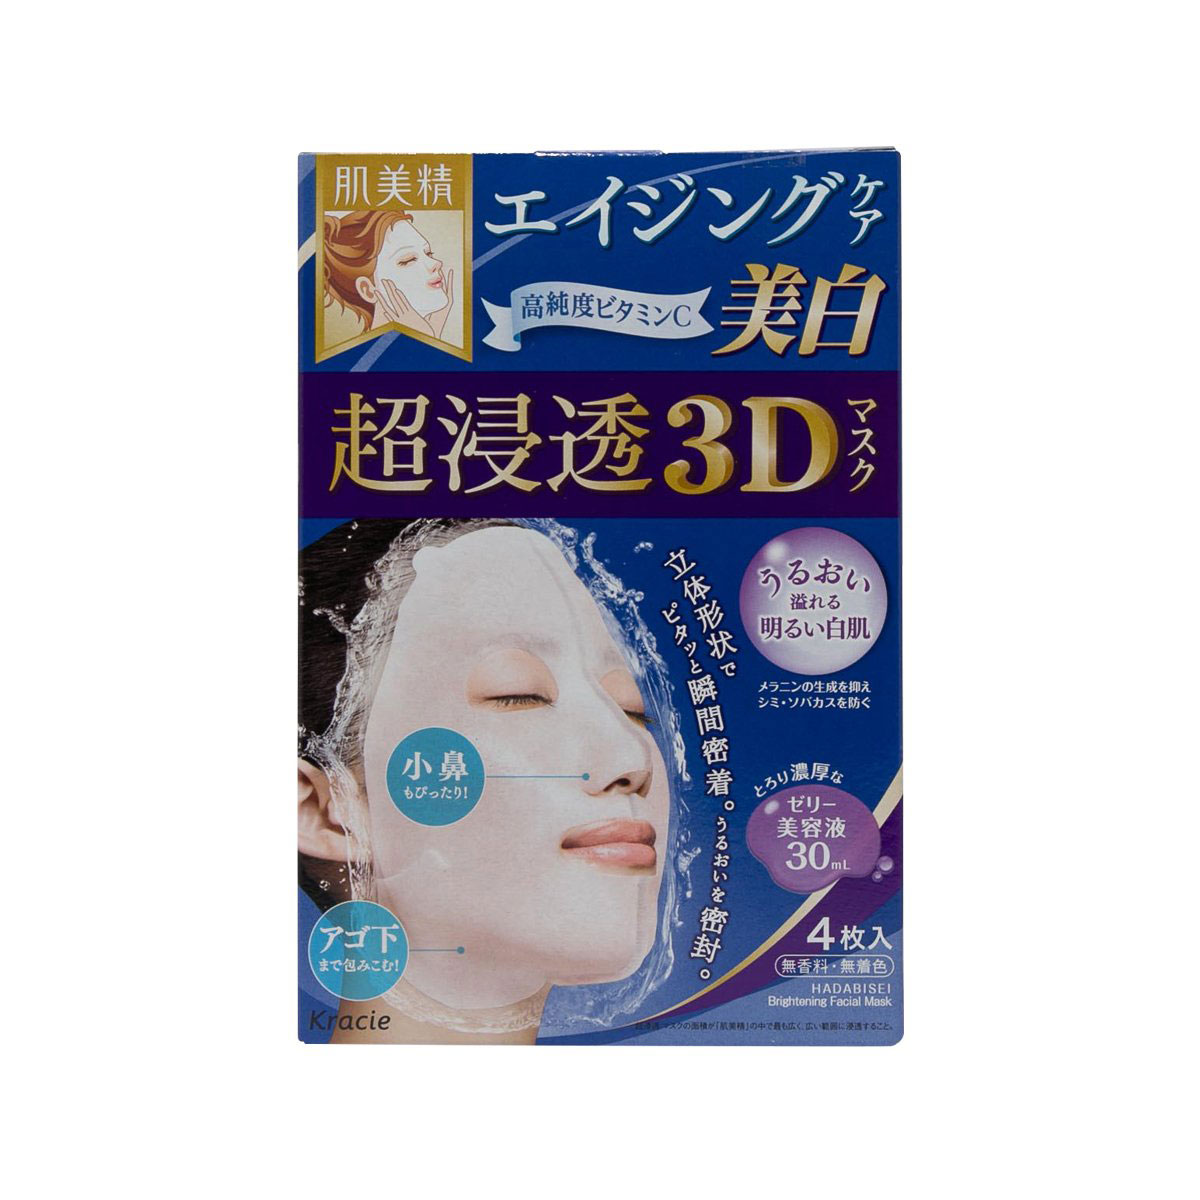 Kracie Hadabisei Brightening 3D Face Mask